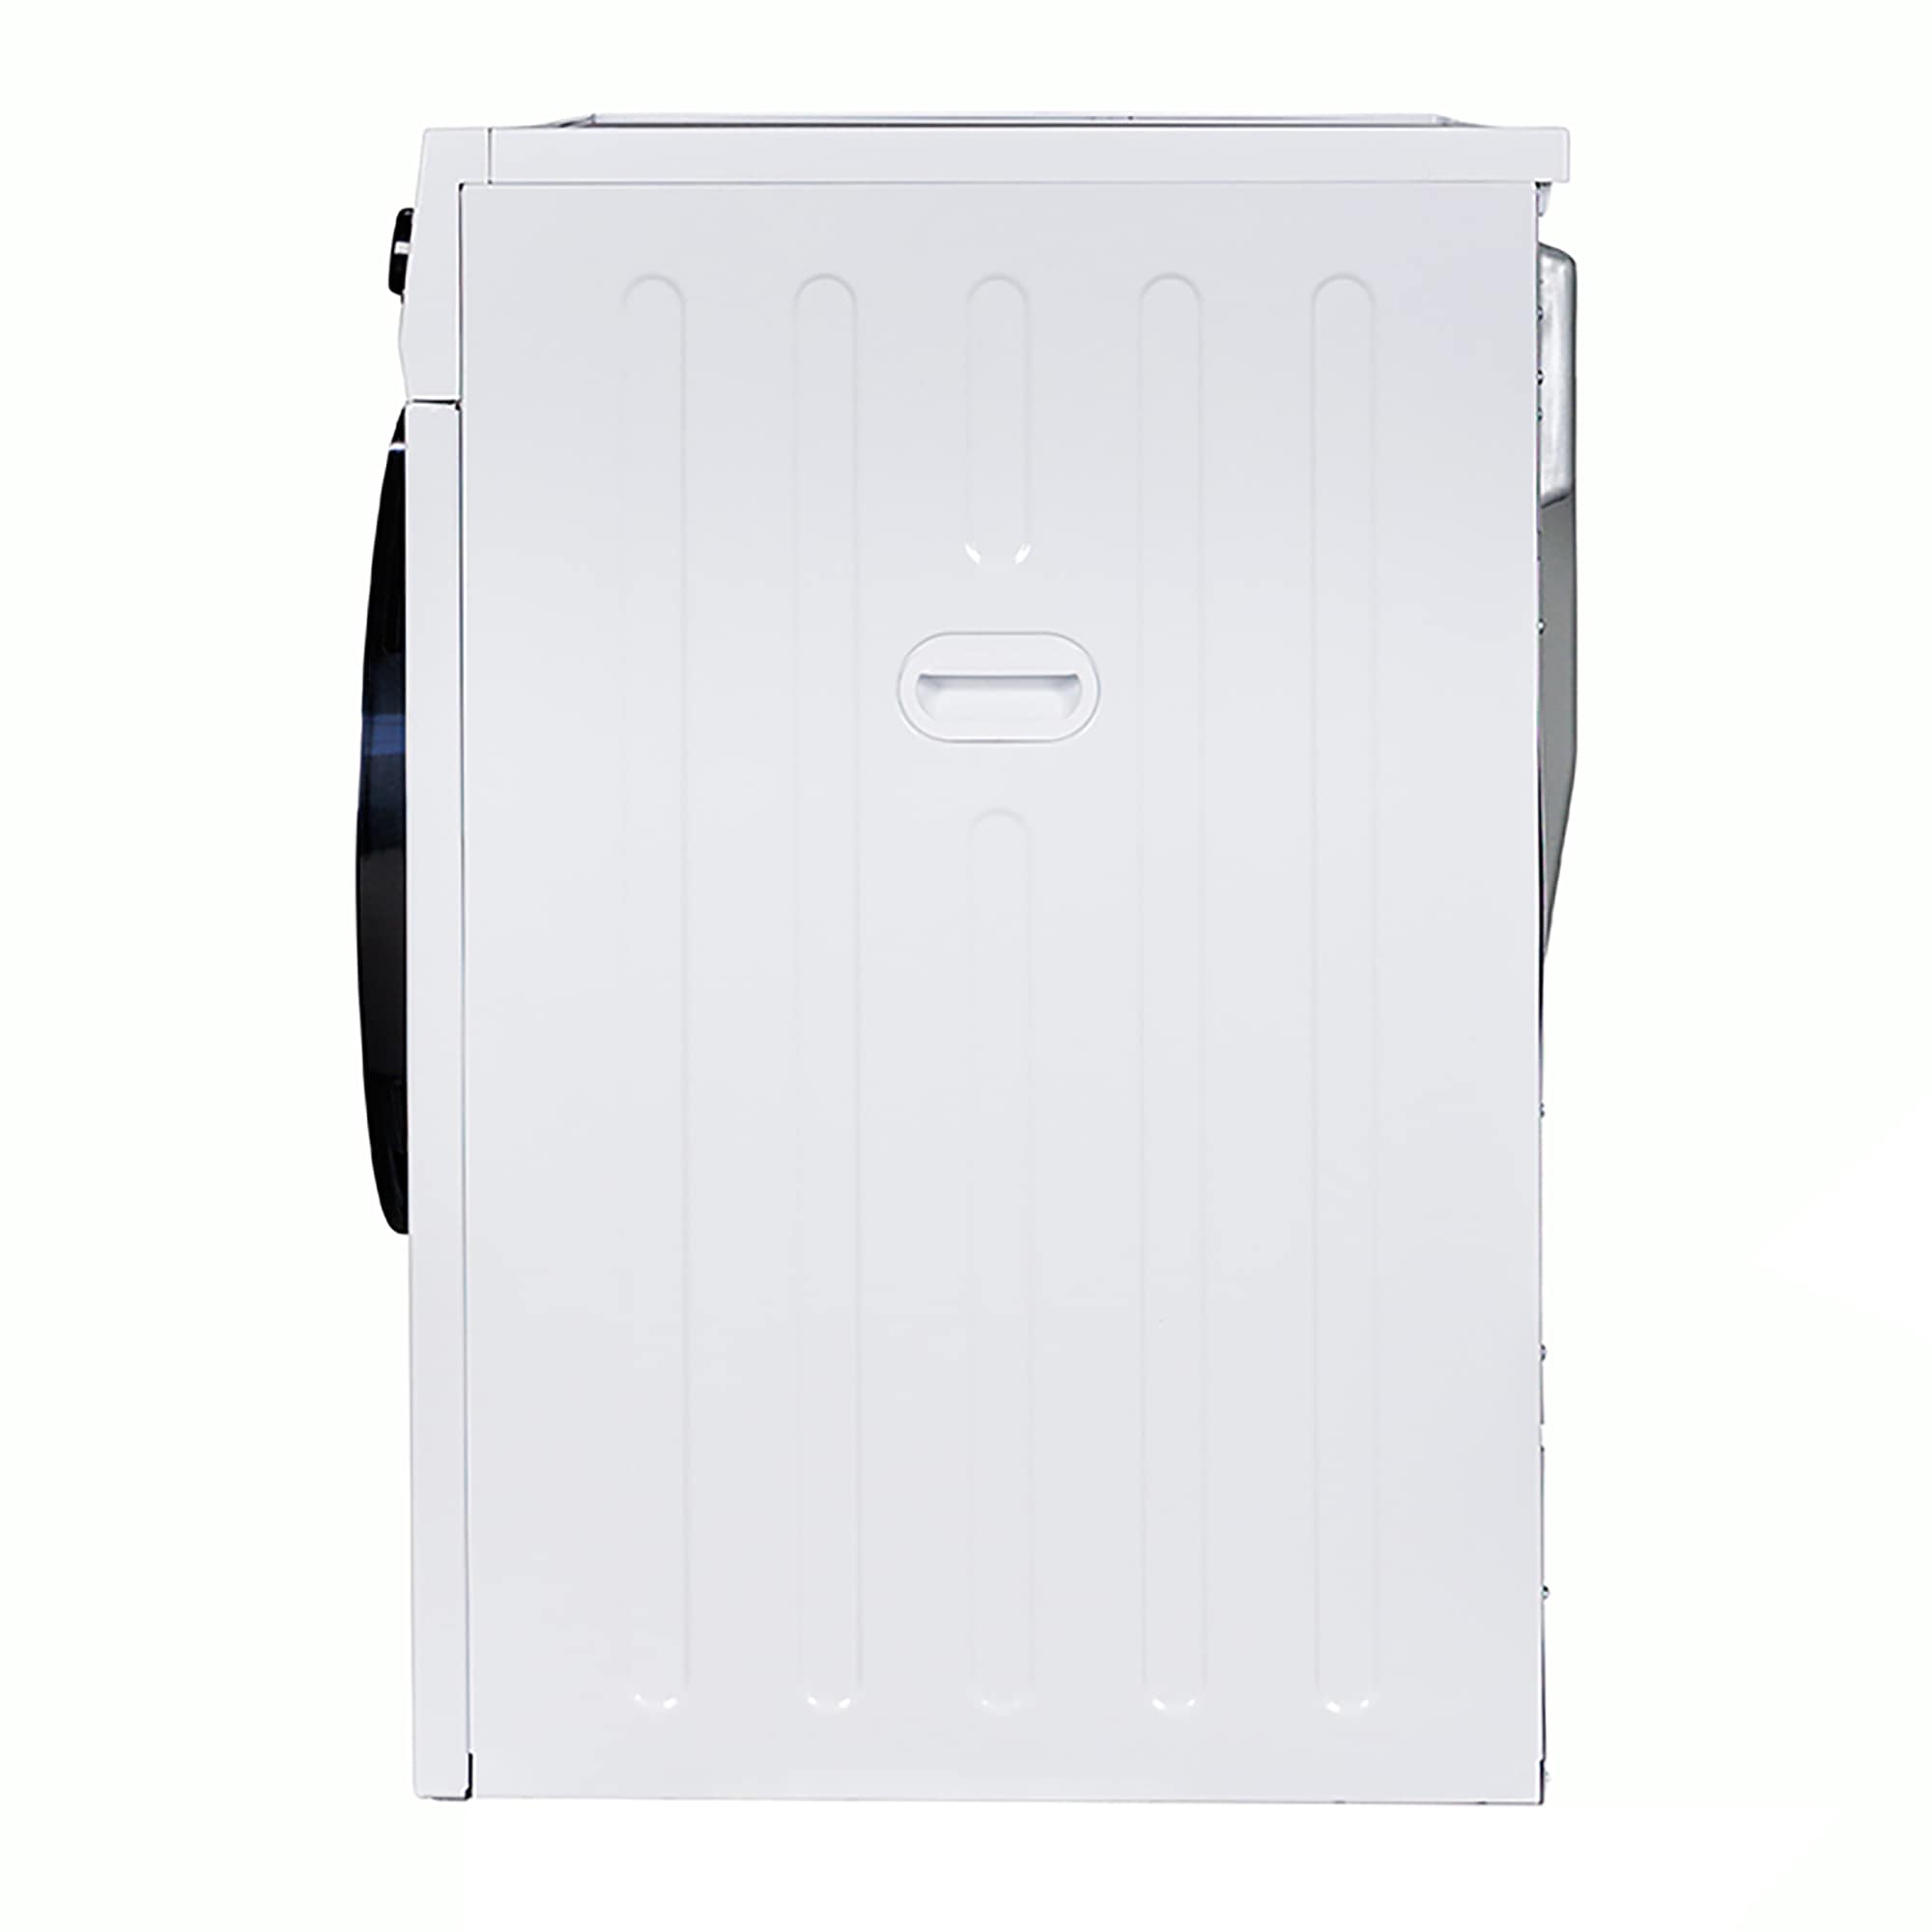 Equator Advanced Appliances 3.5-cu ft Stackable Electric Dryer